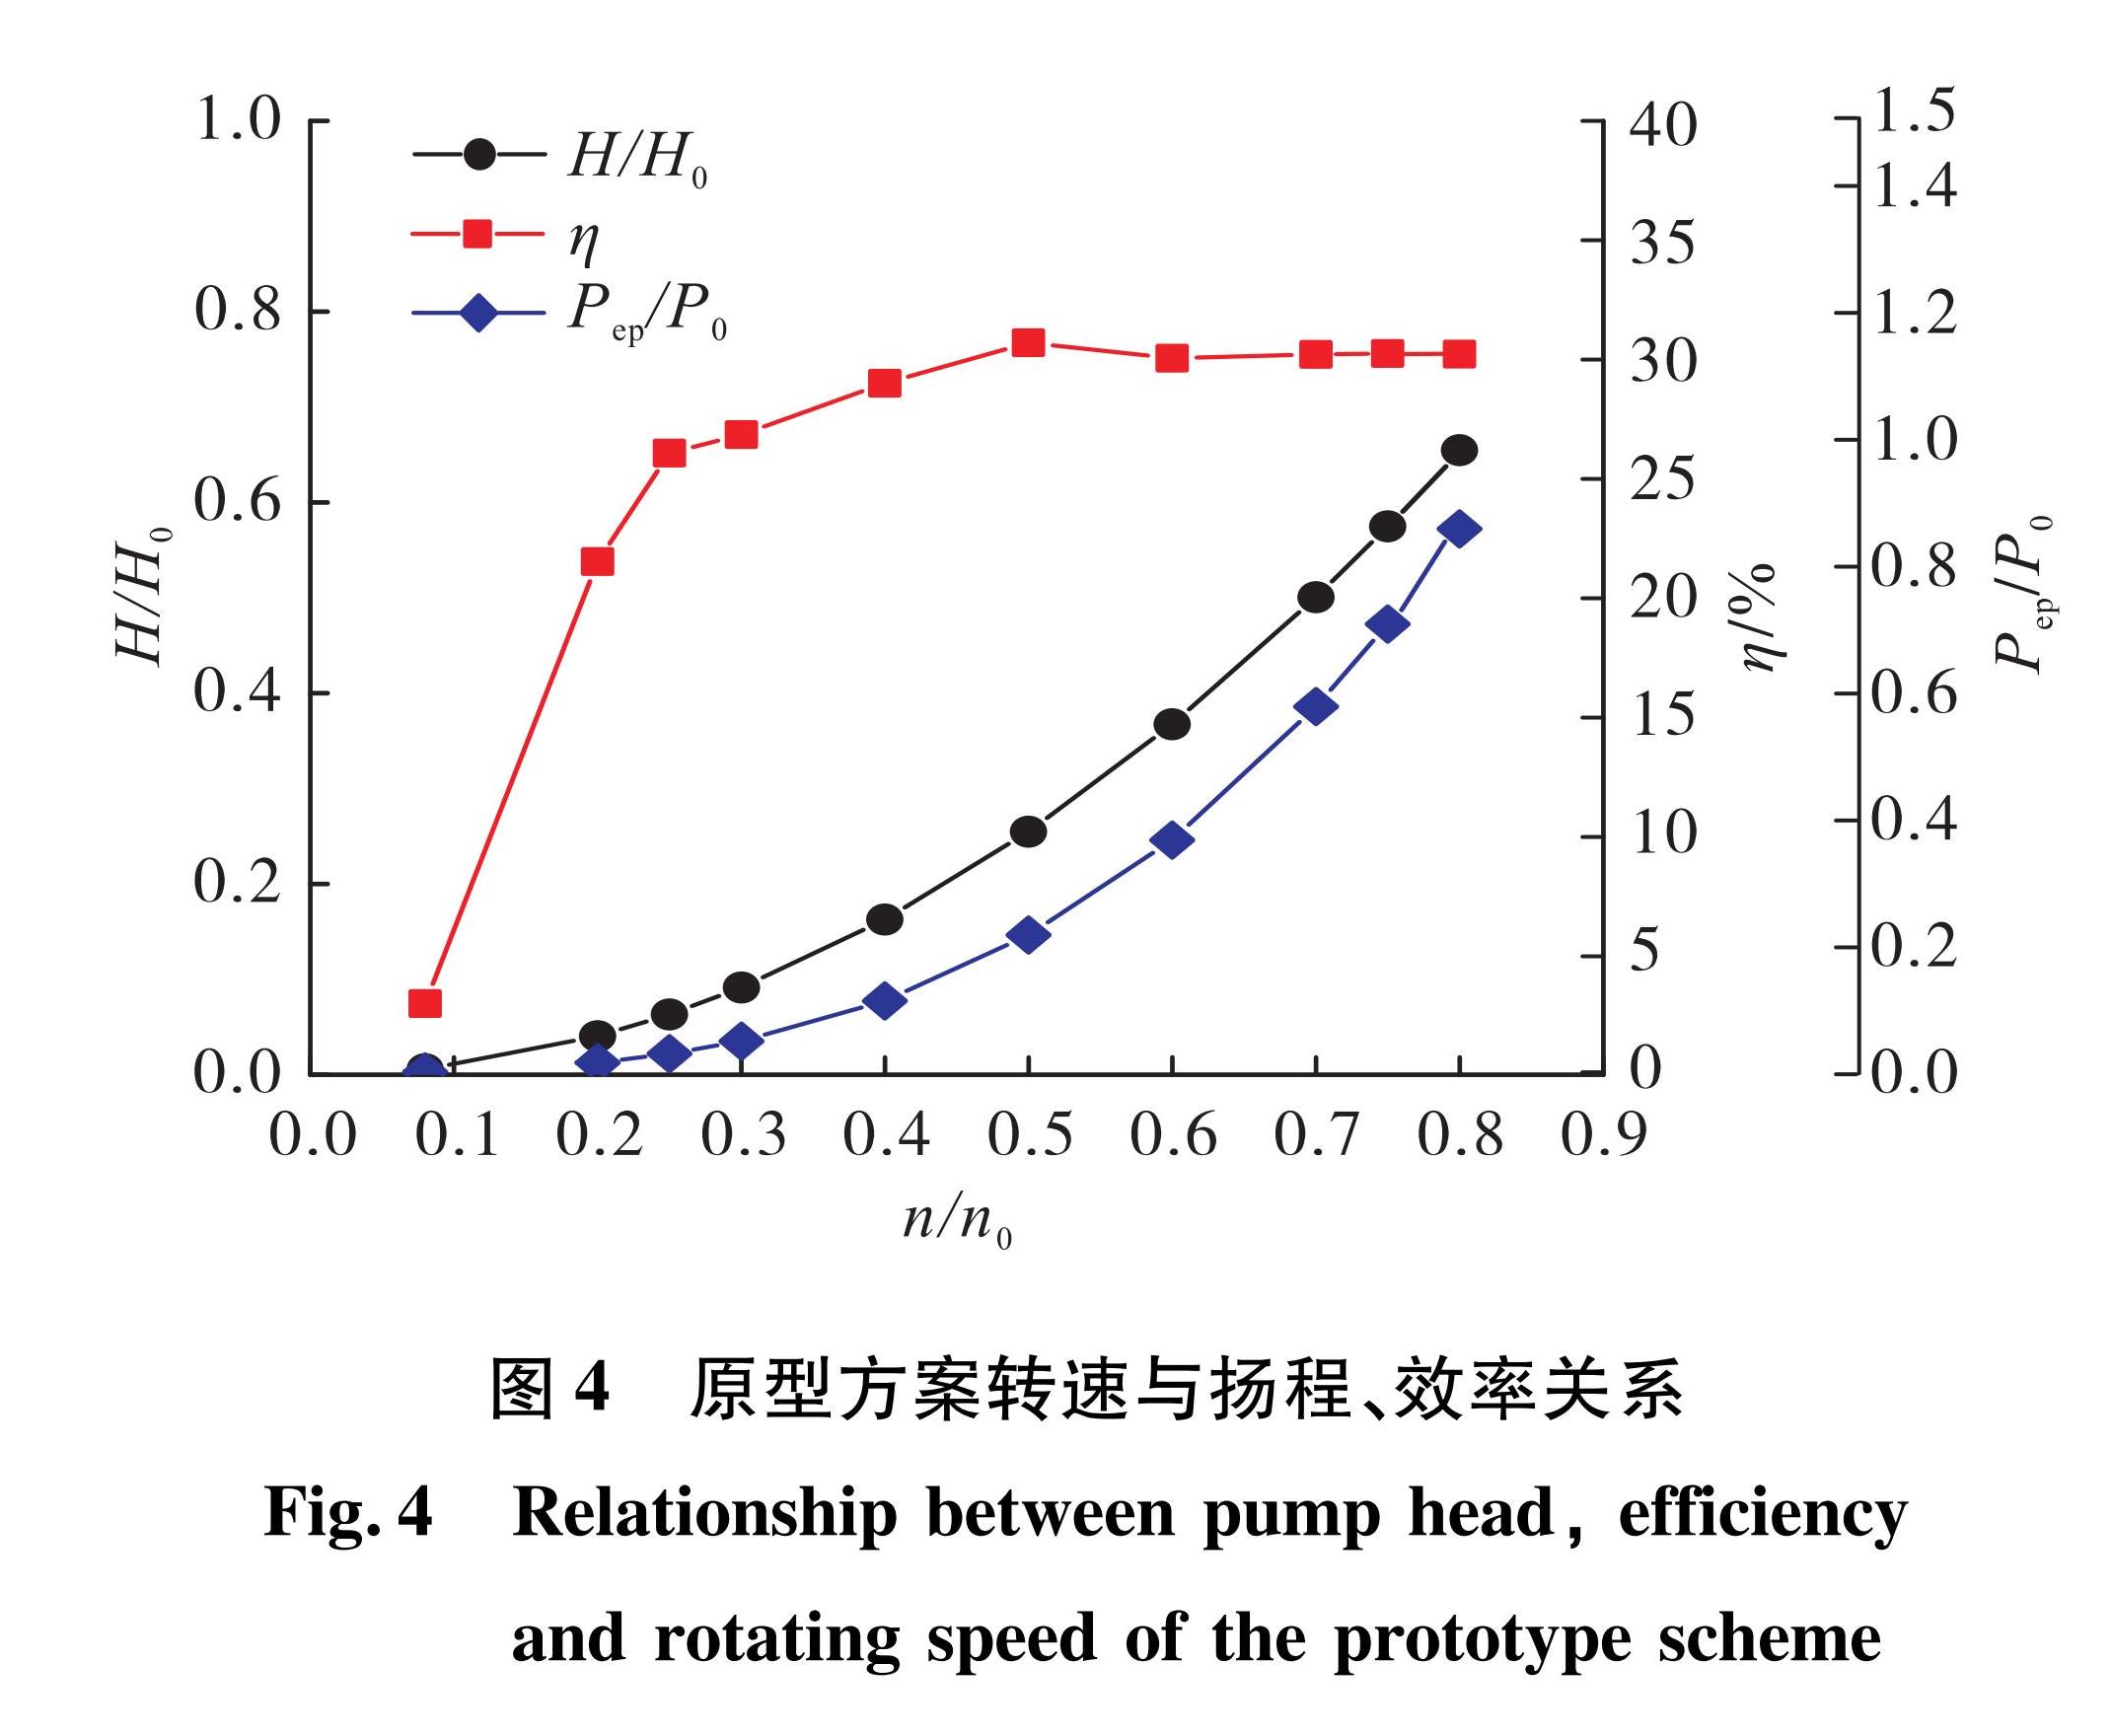 图4 原型方案转速与扬程、效率关系<br/>Fig.4 Relationship between pump head, efficiency and rotating speed of the prototype scheme